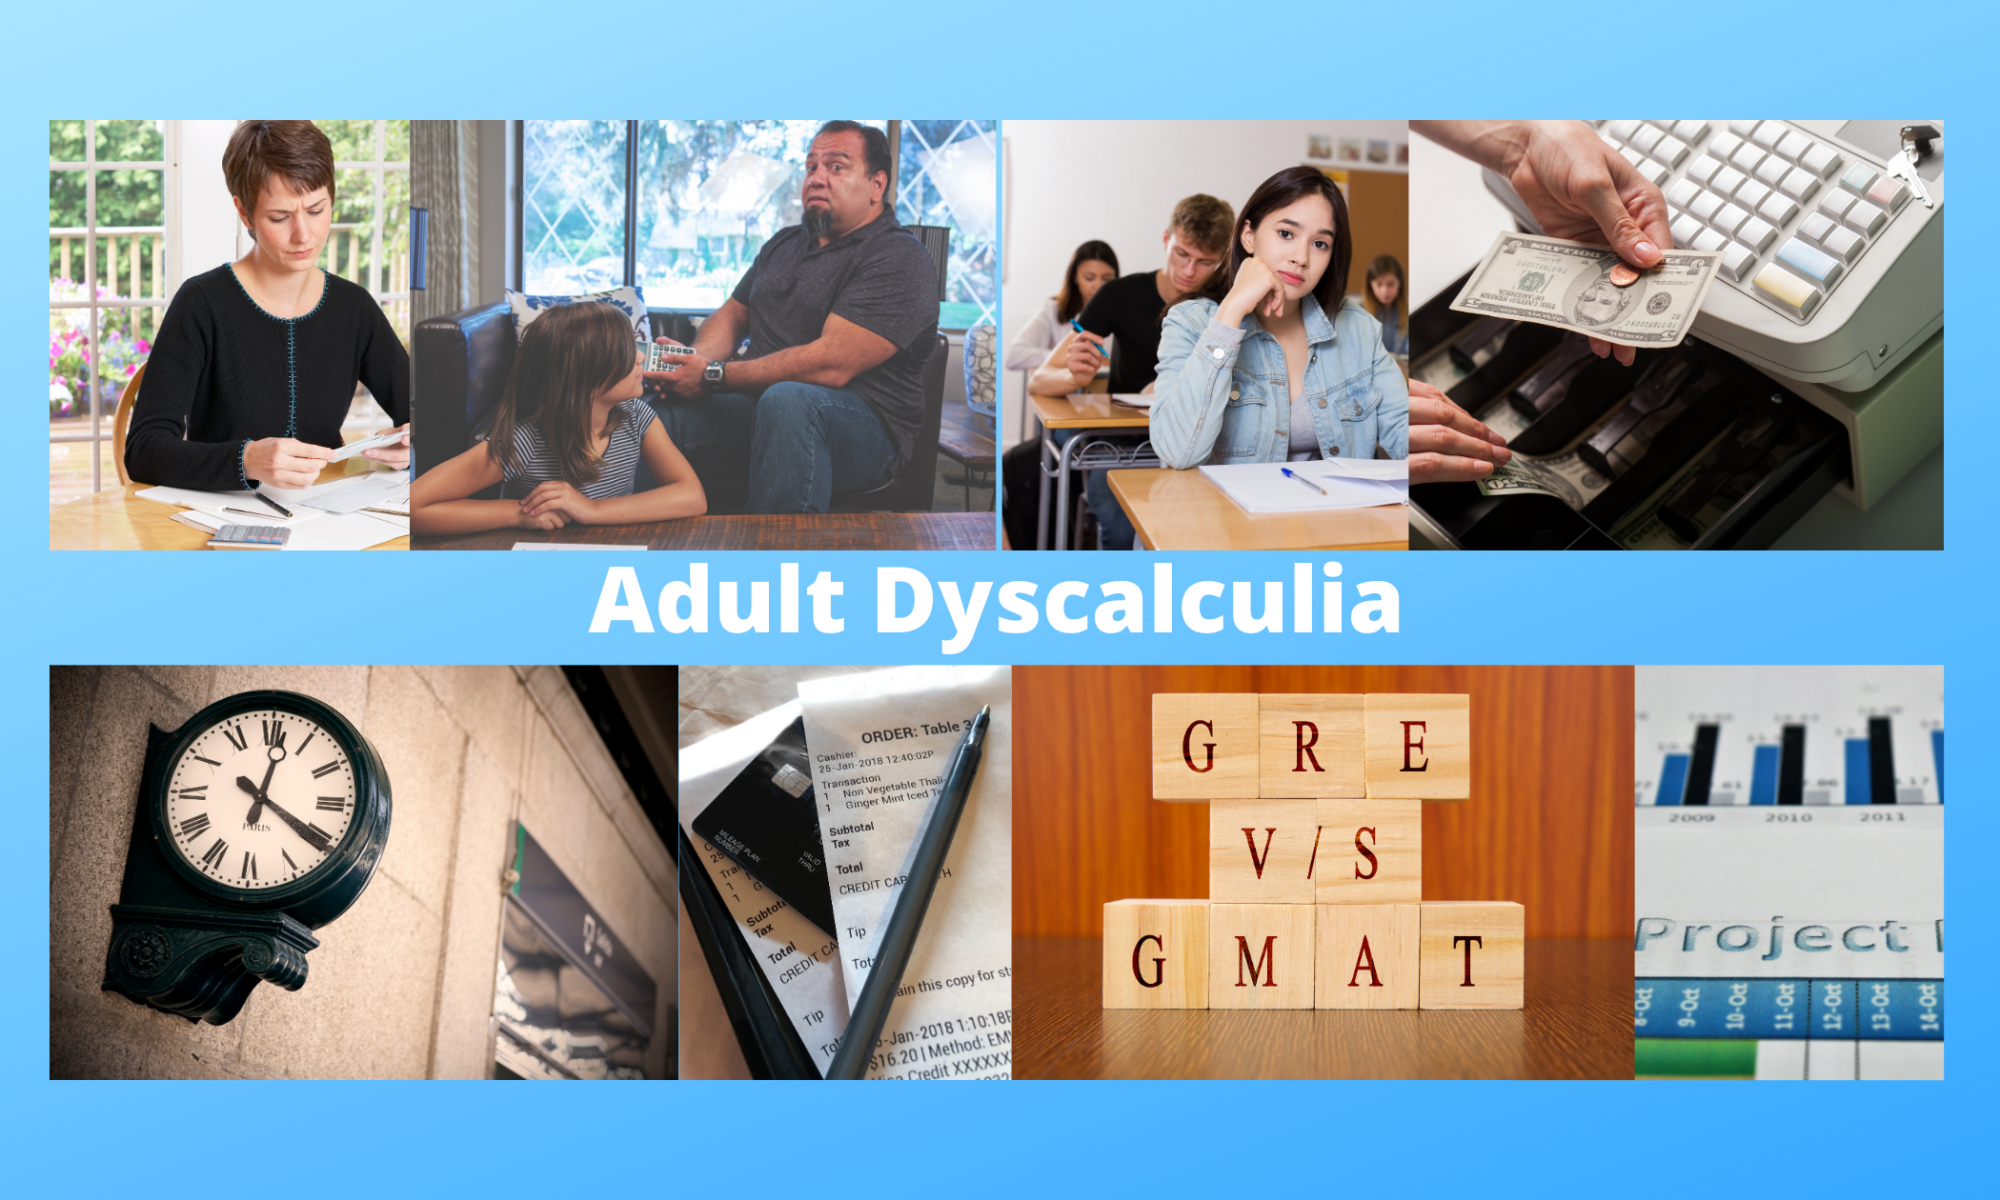 Adult Dyscalculia